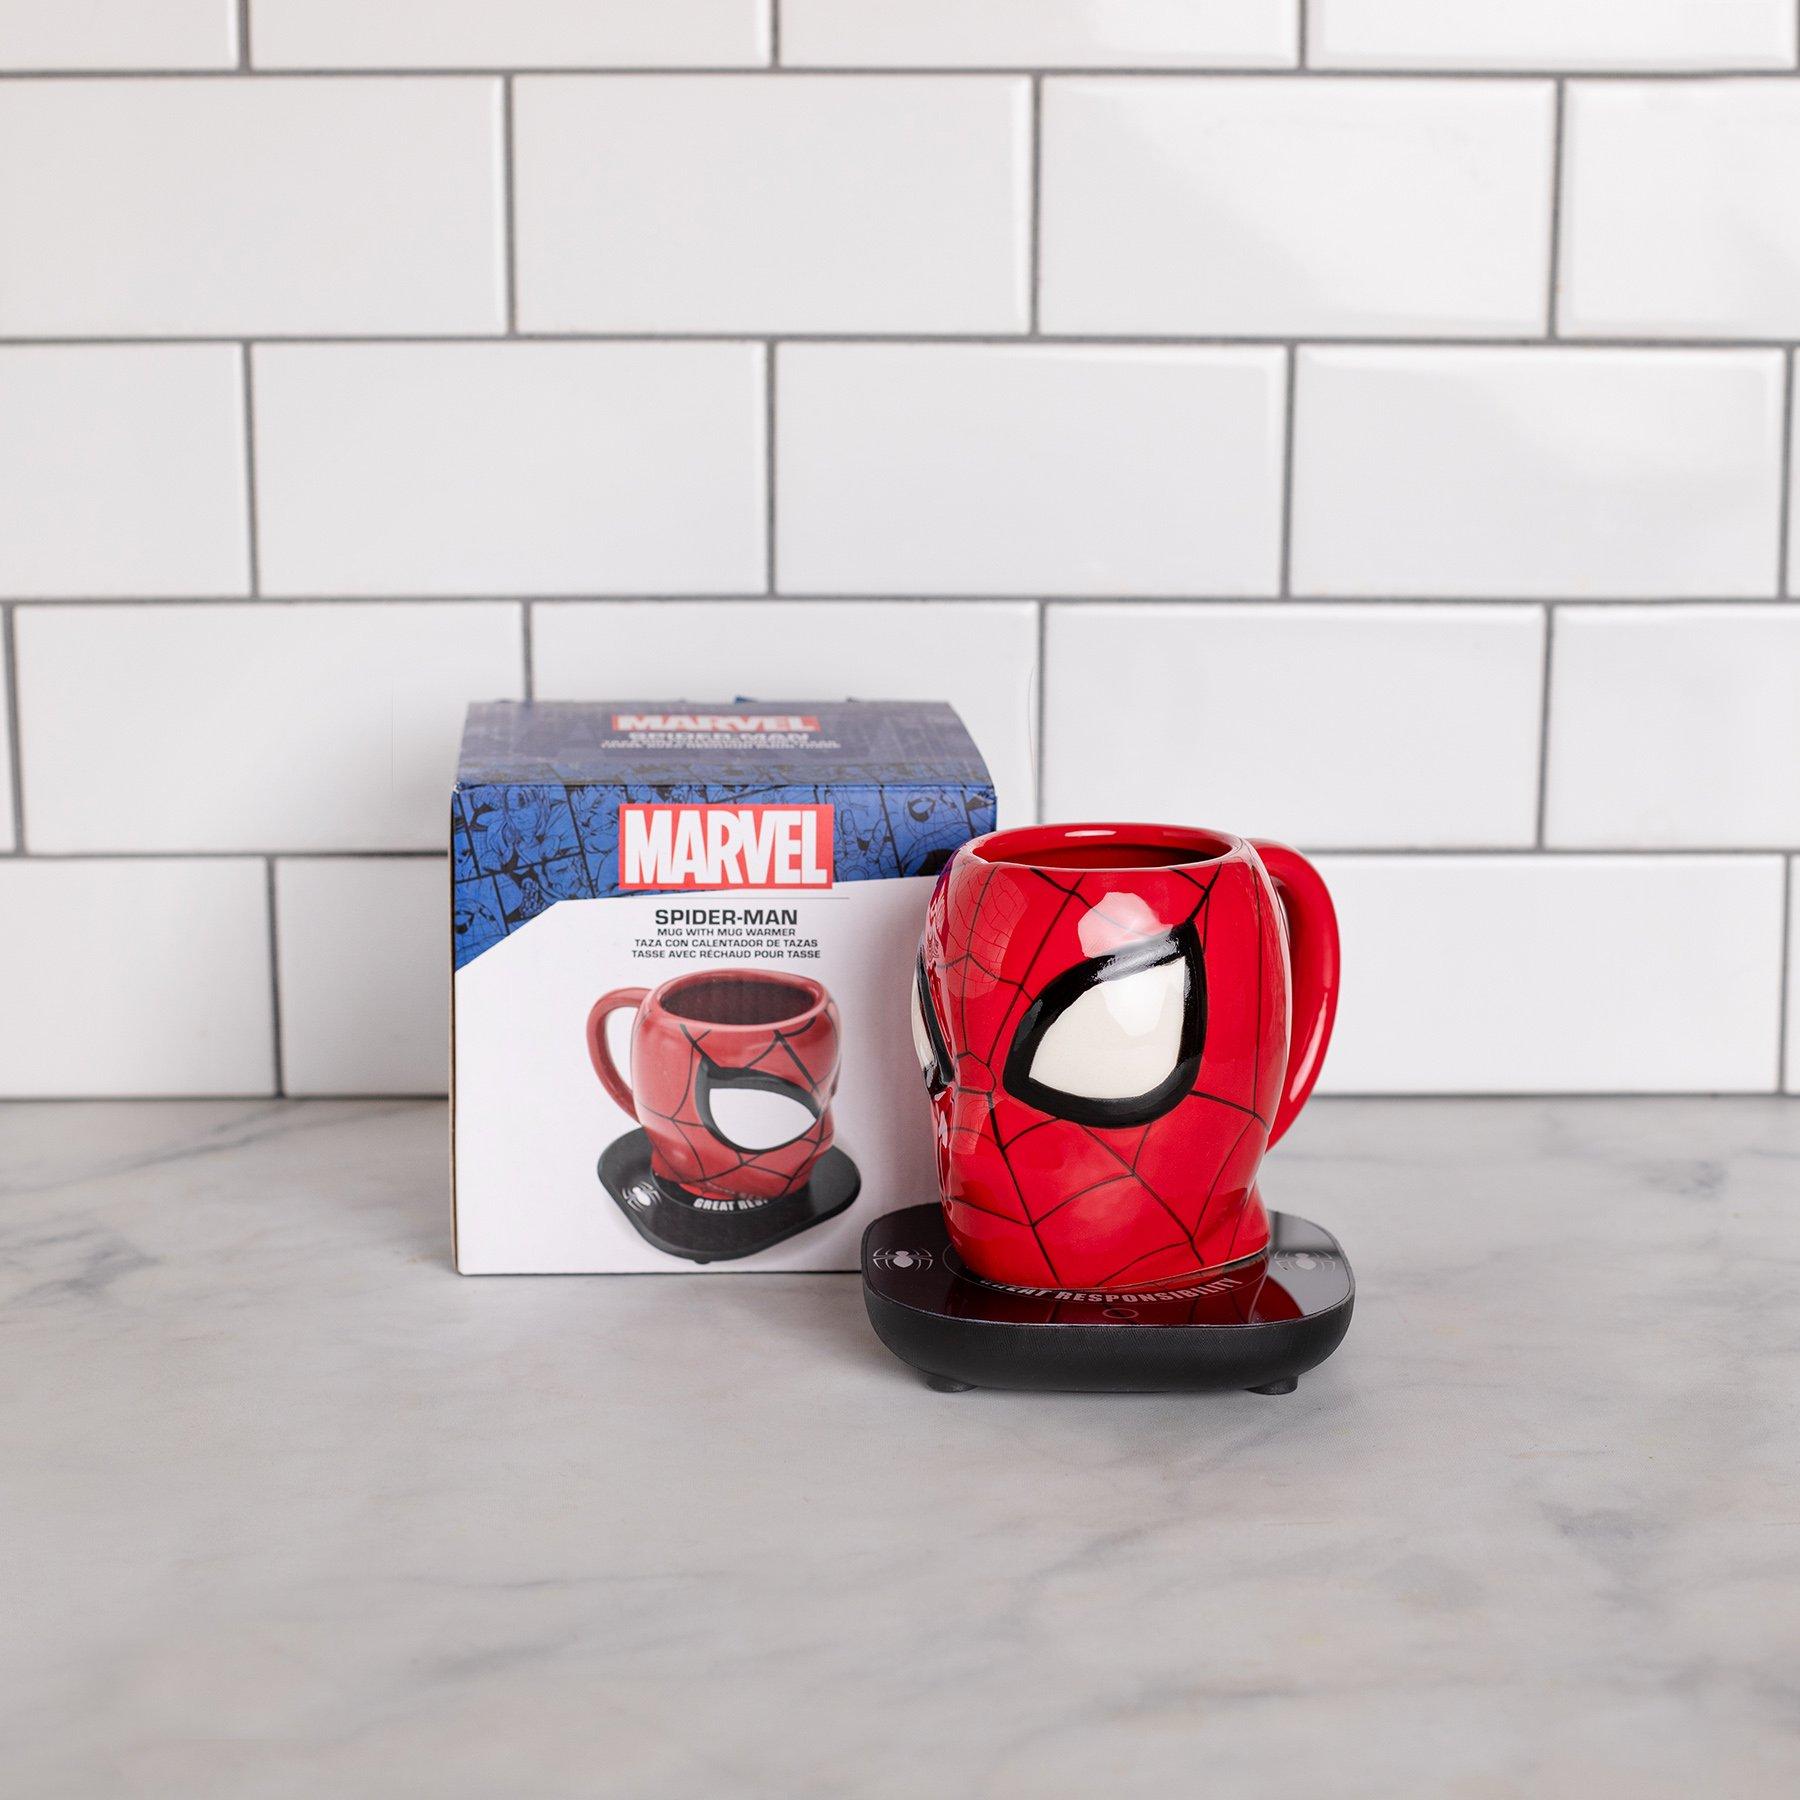 https://media.gamestop.com/i/gamestop/20005571_ALT04/Marvels-Spiderman-Mug-Warmer-with-Molded-Mug?$pdp$